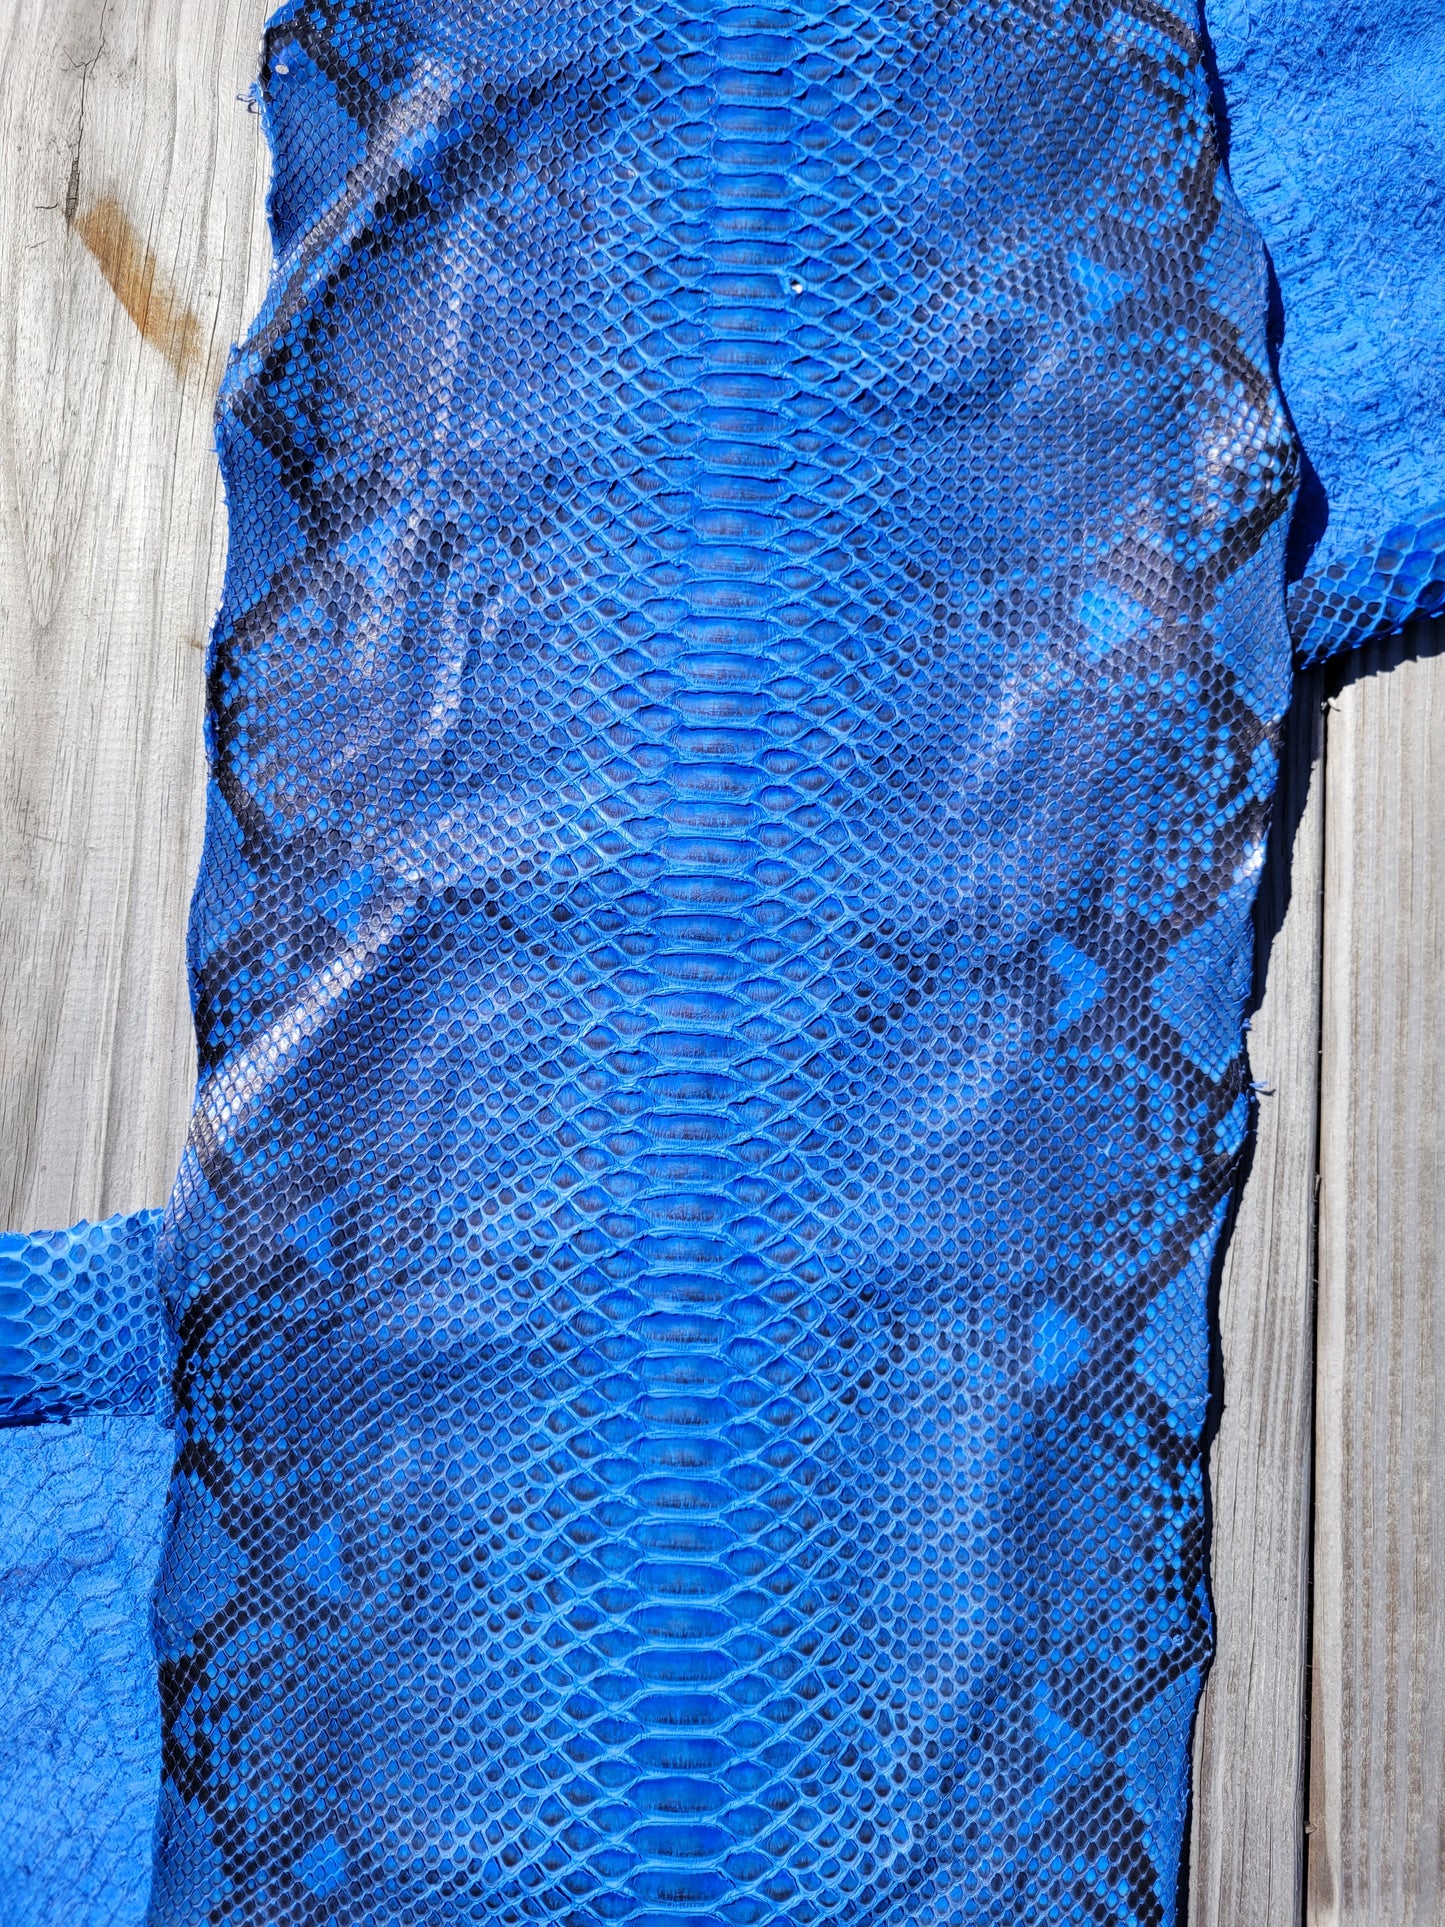 Python Skin - 1.5m (half length) - Grade 1 Natural Blue (Matte)